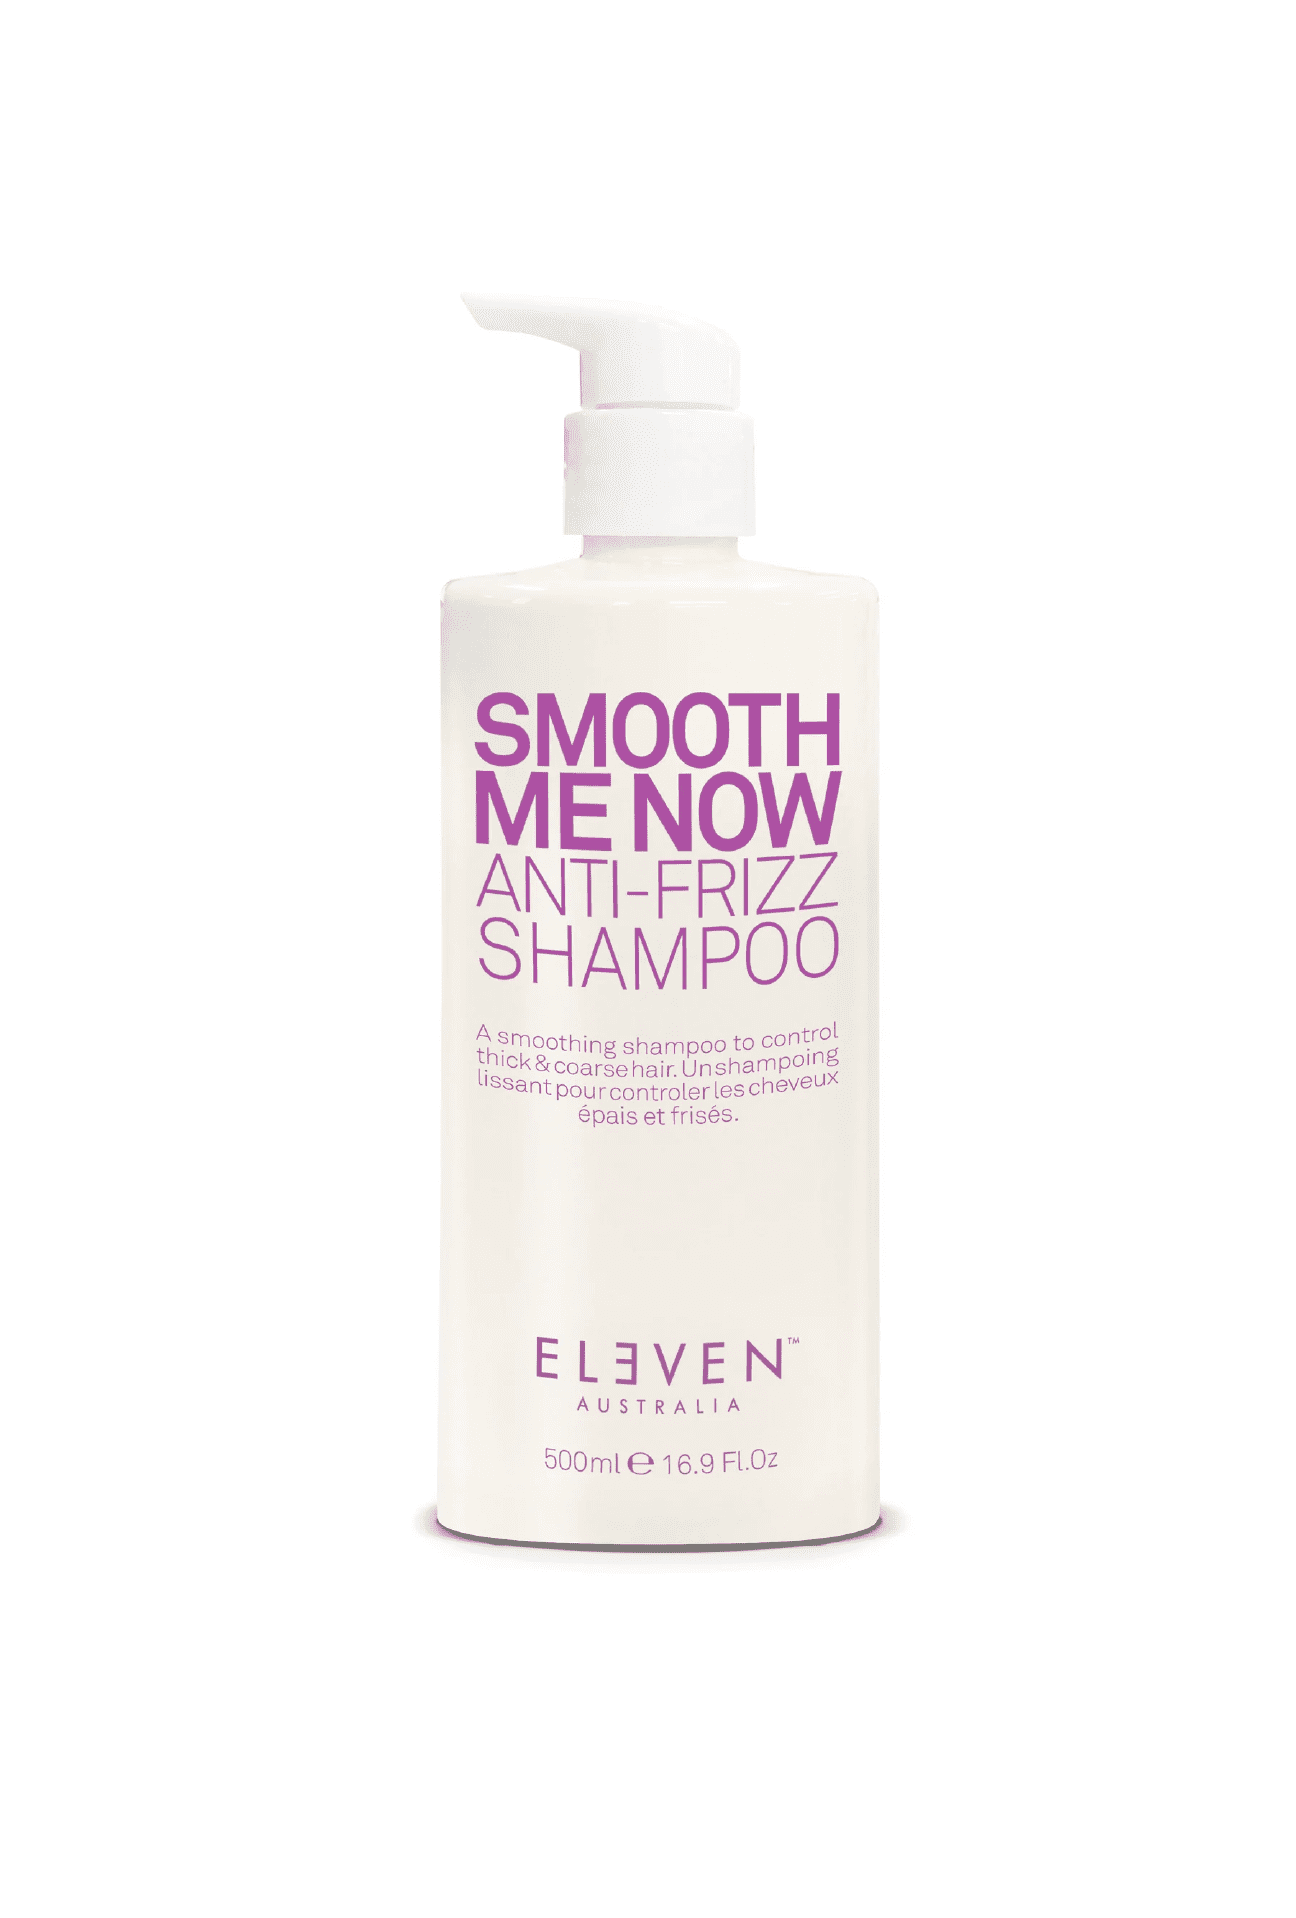 Smooth Me Now Anti-Frizz Shampoo - 500ml - ELEVEN Australia